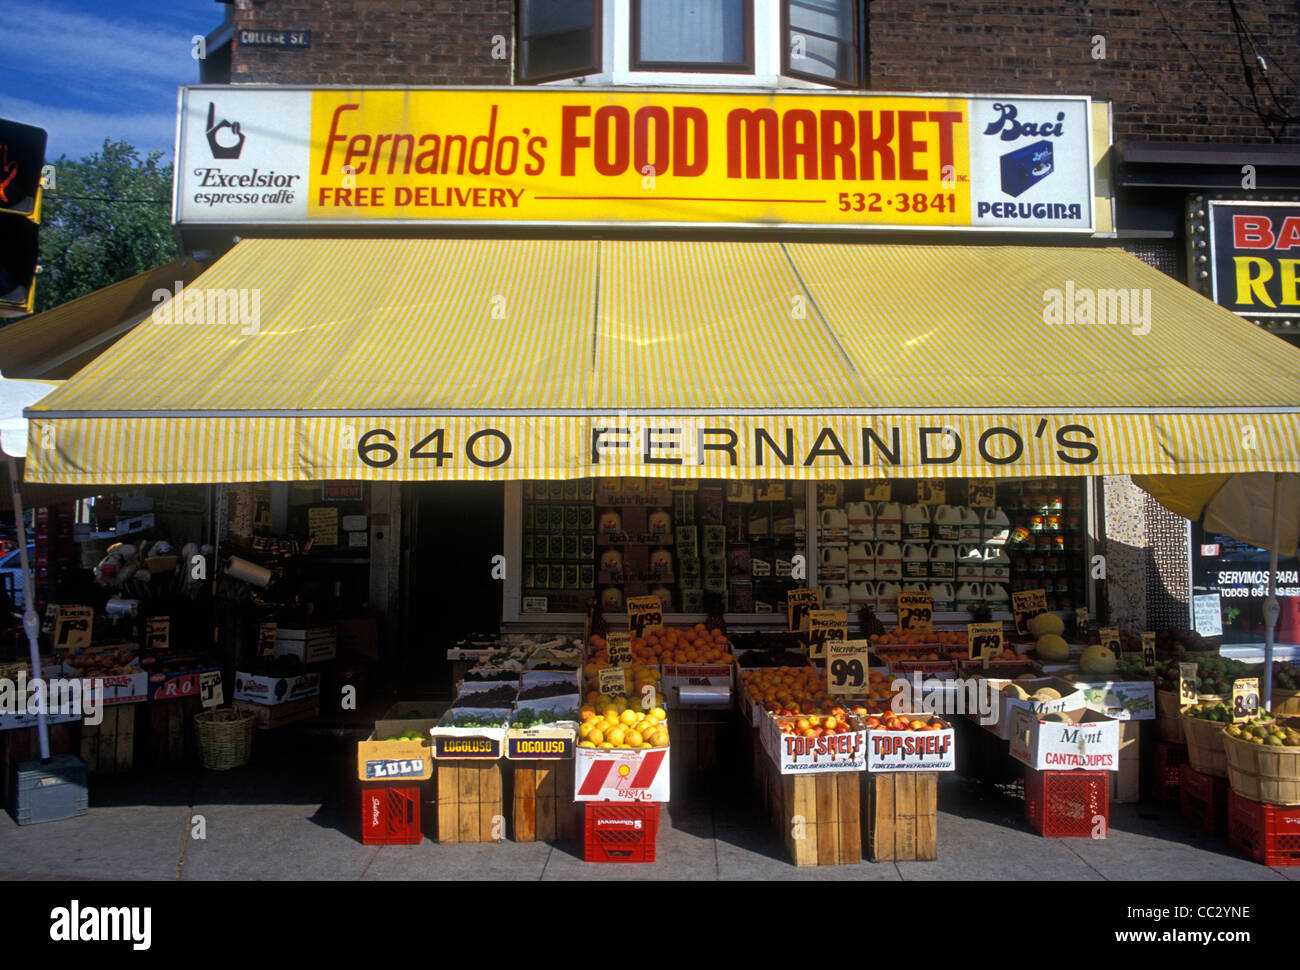 Fernando's food market, Fernando's, food market, grocery store, bodega, Little Italy, Toronto, Ontario Province, Canada Stock Photo